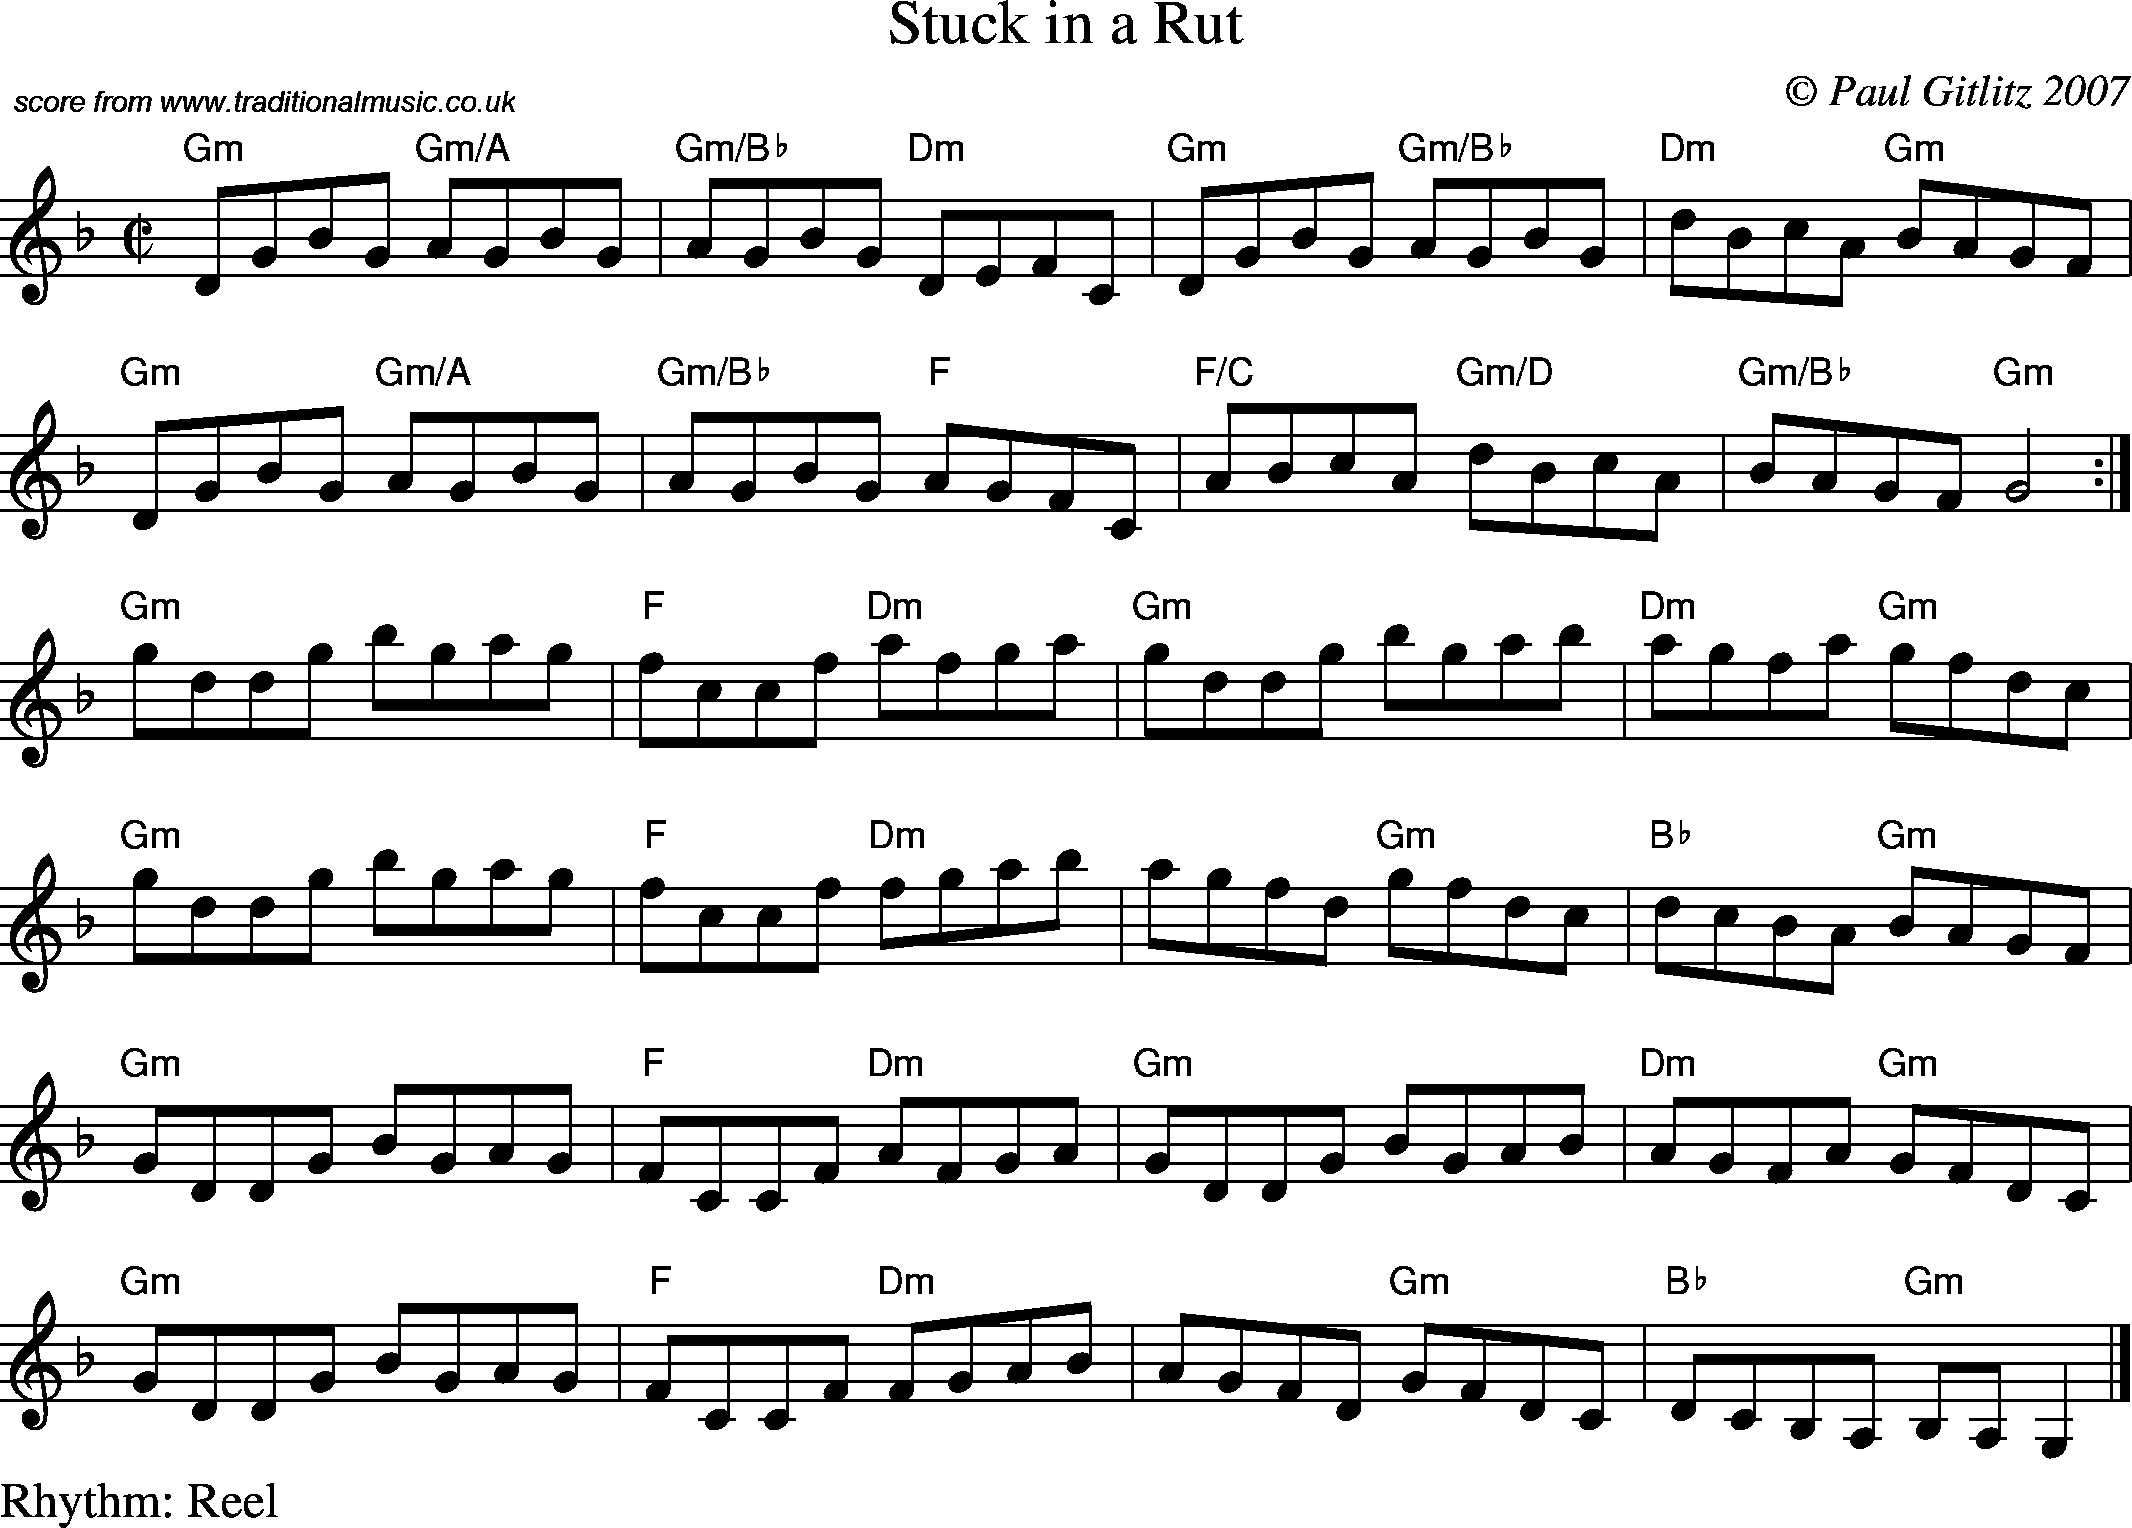 Sheet Music Score for Reel - Stuck in a Rut